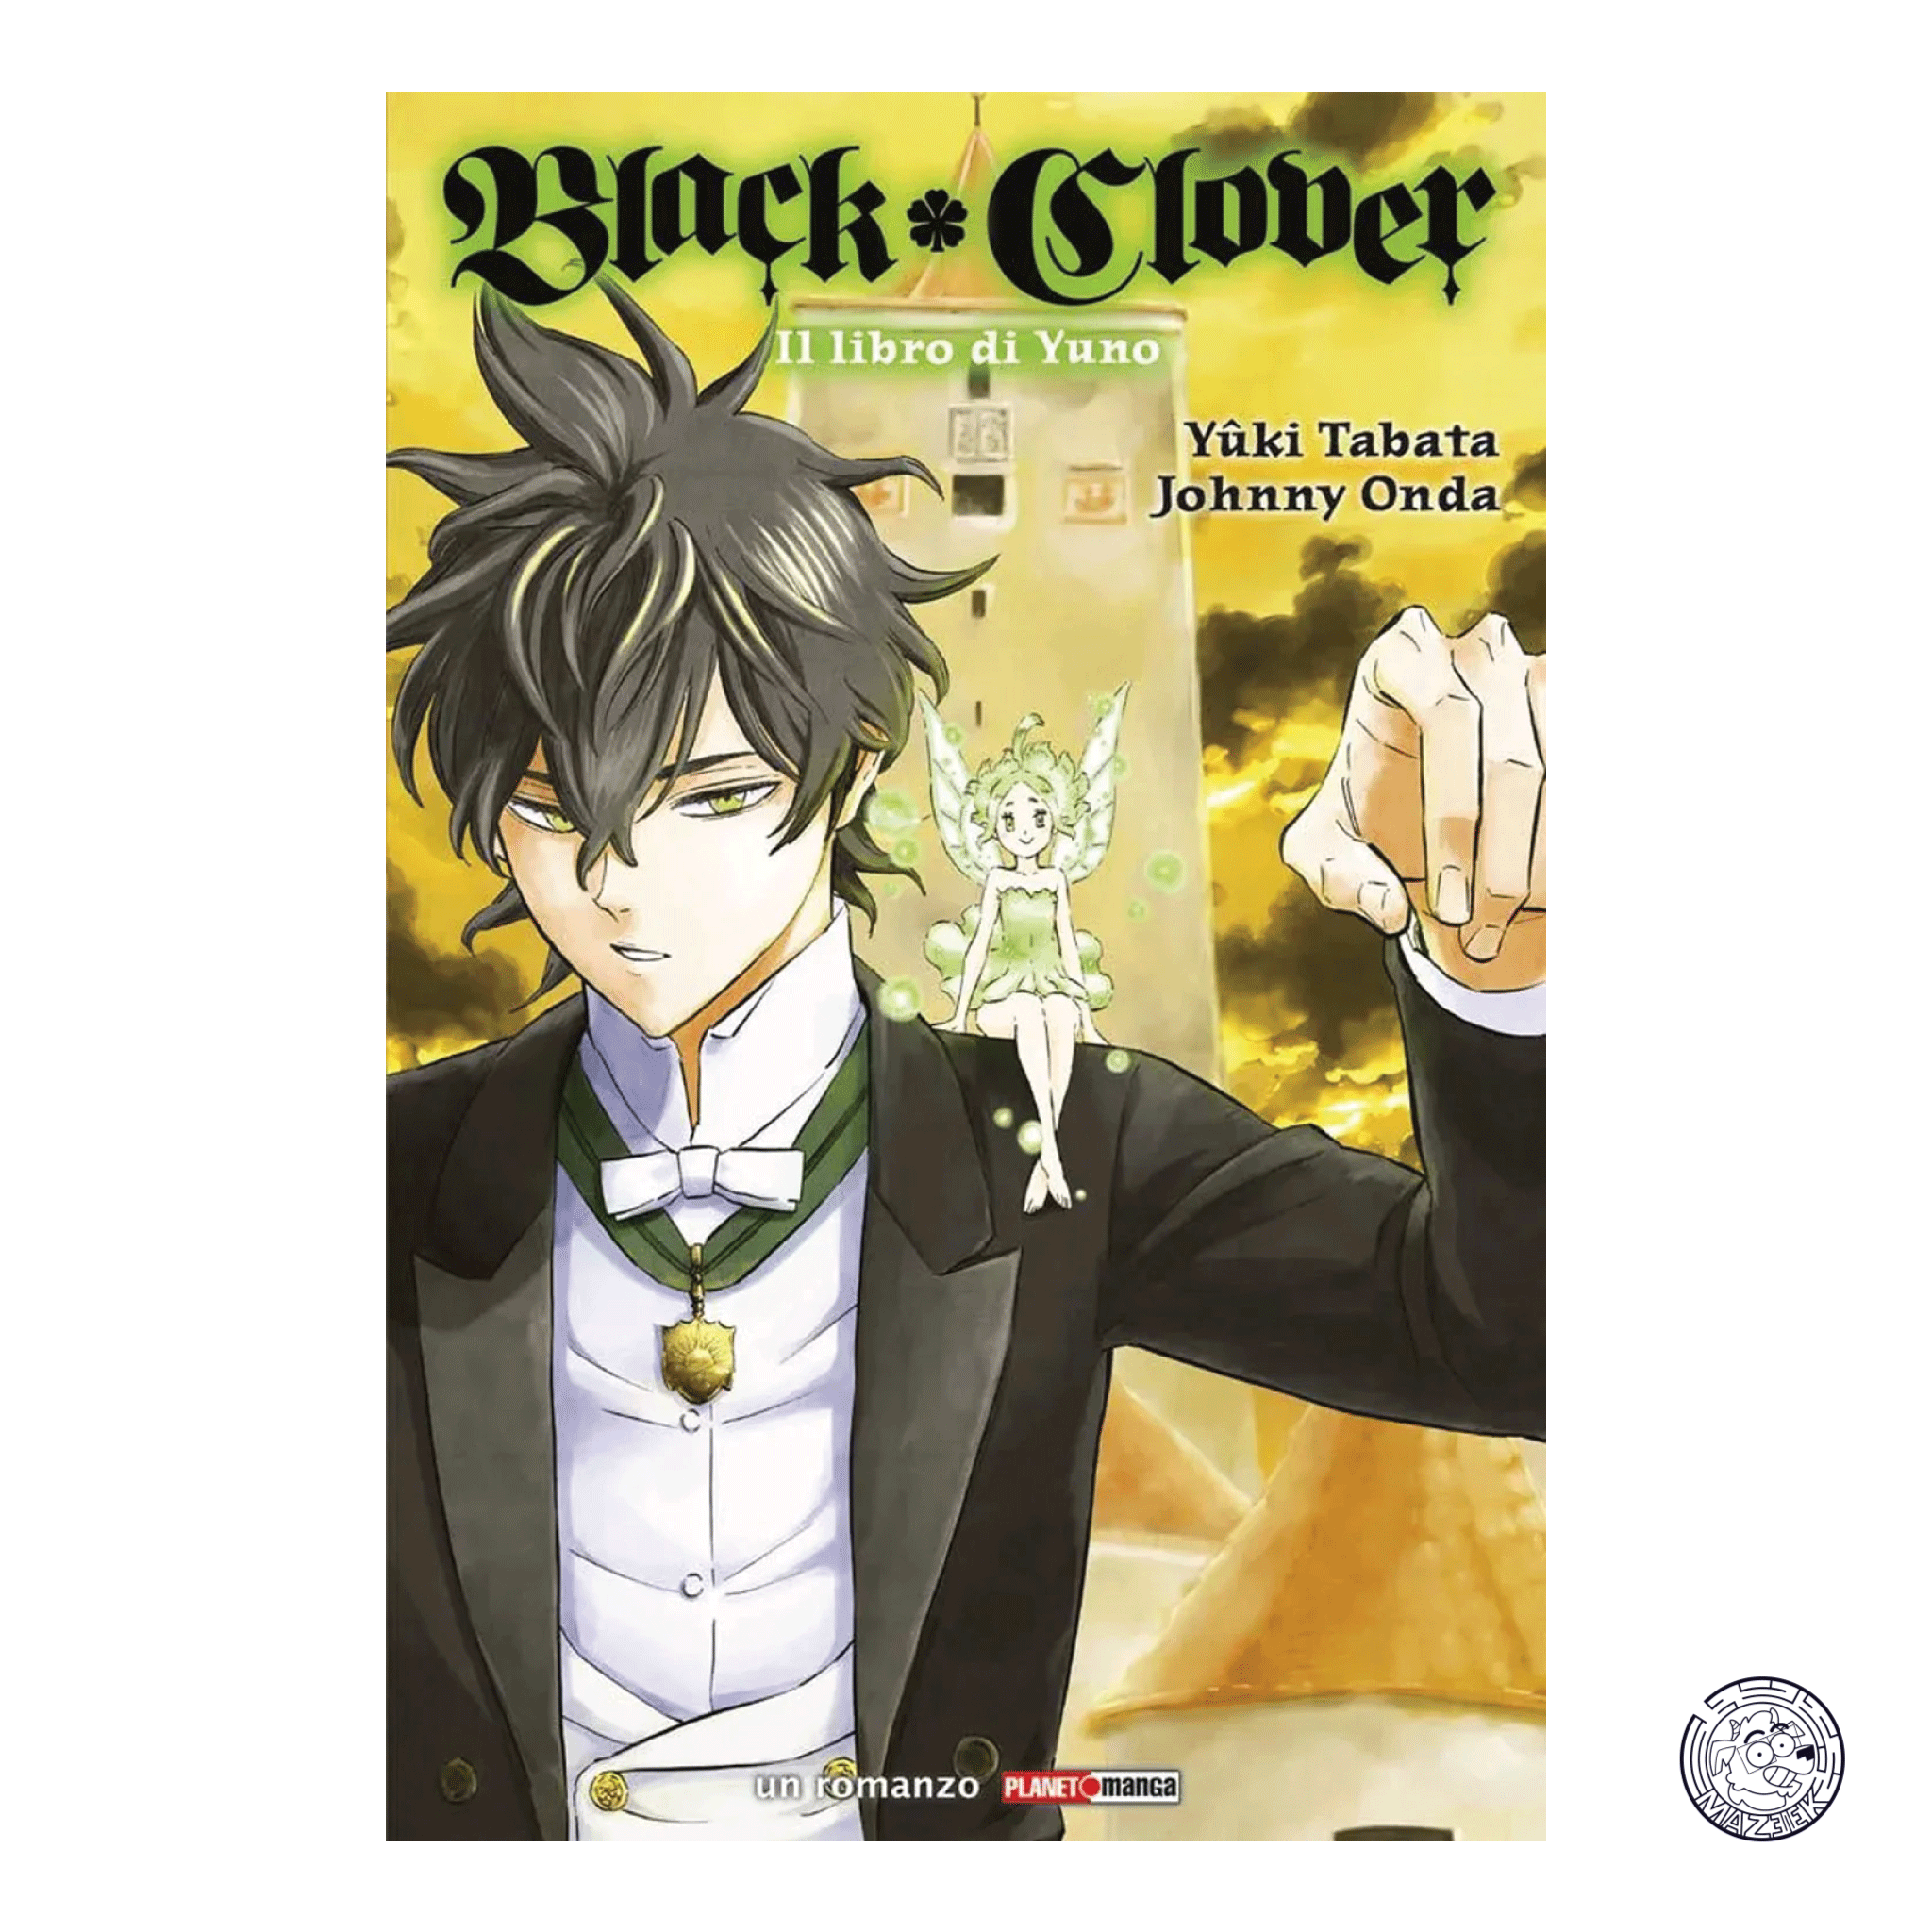 Black Clover, the Book of Yuno